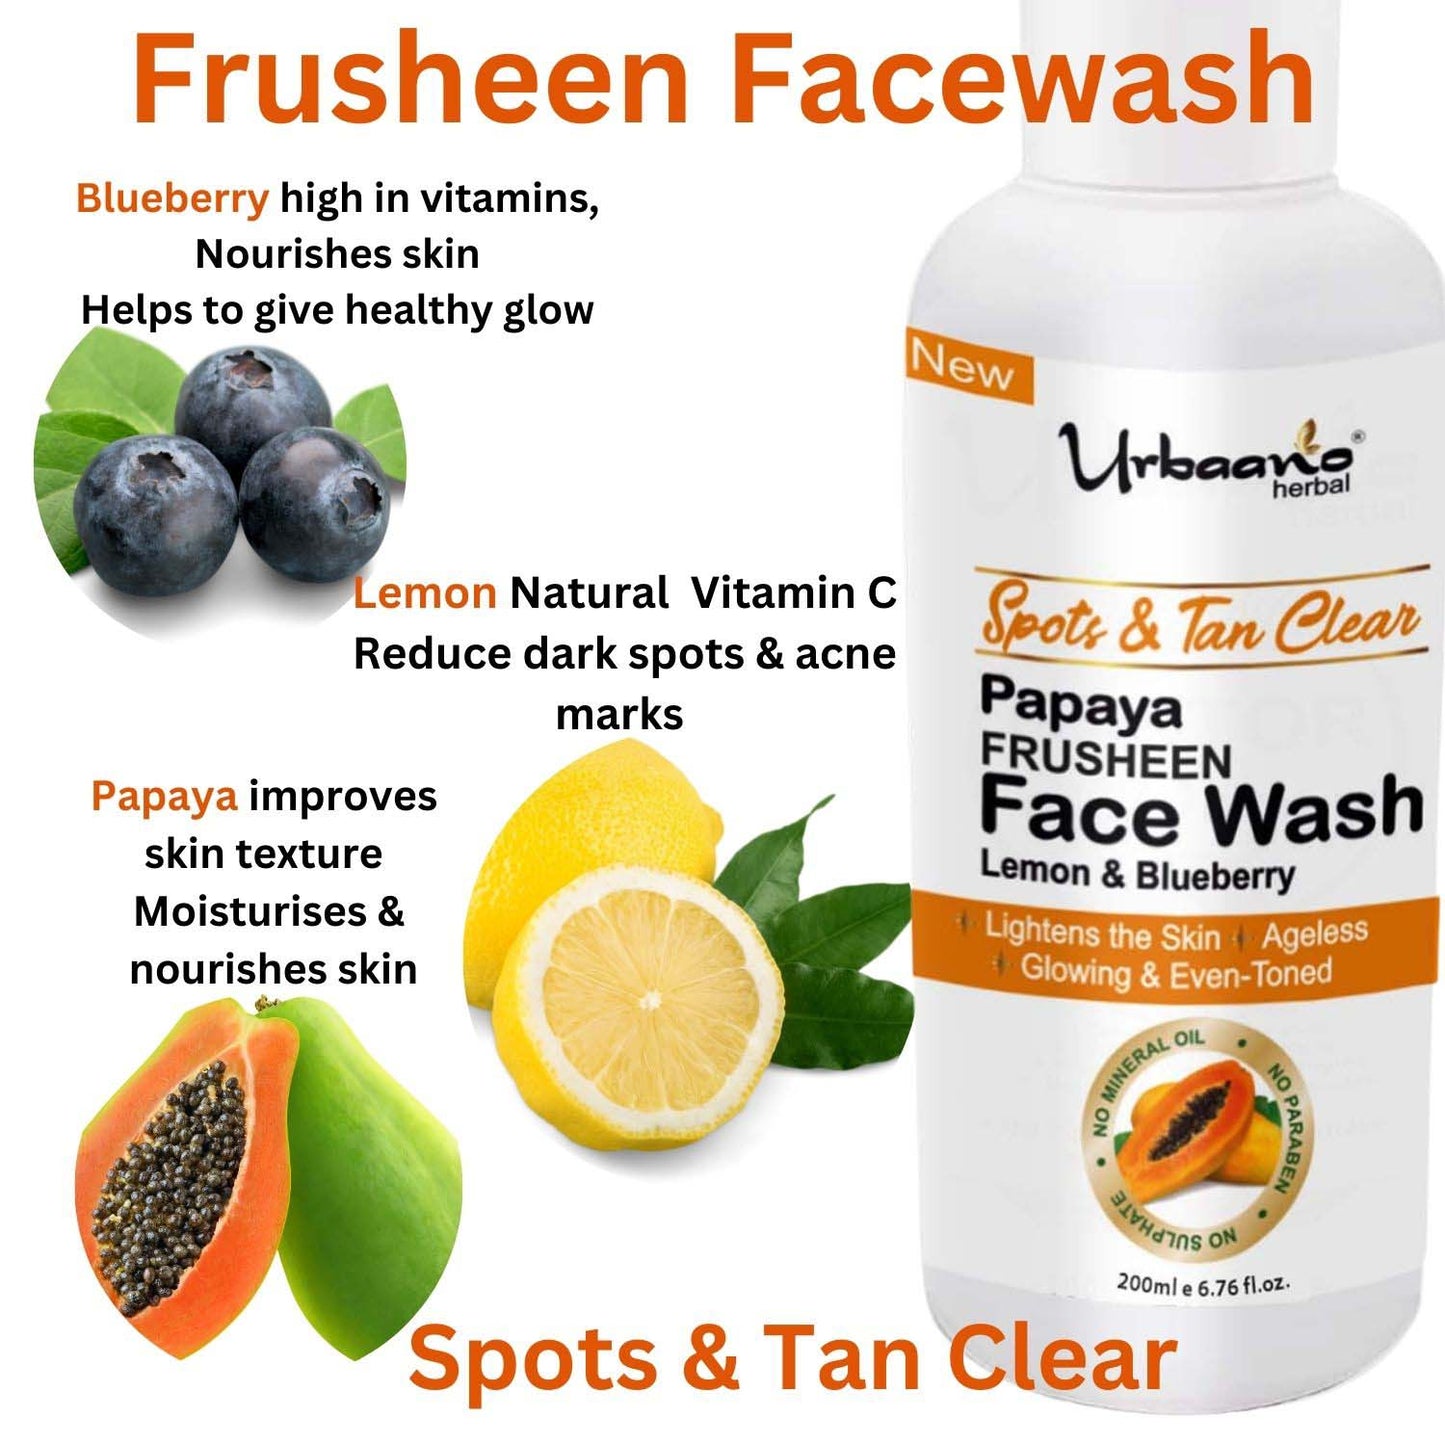 urbaano herbal frusheen face wash papaya for skin lightening, even tone, spot & tan clear with lemon & blueberry 